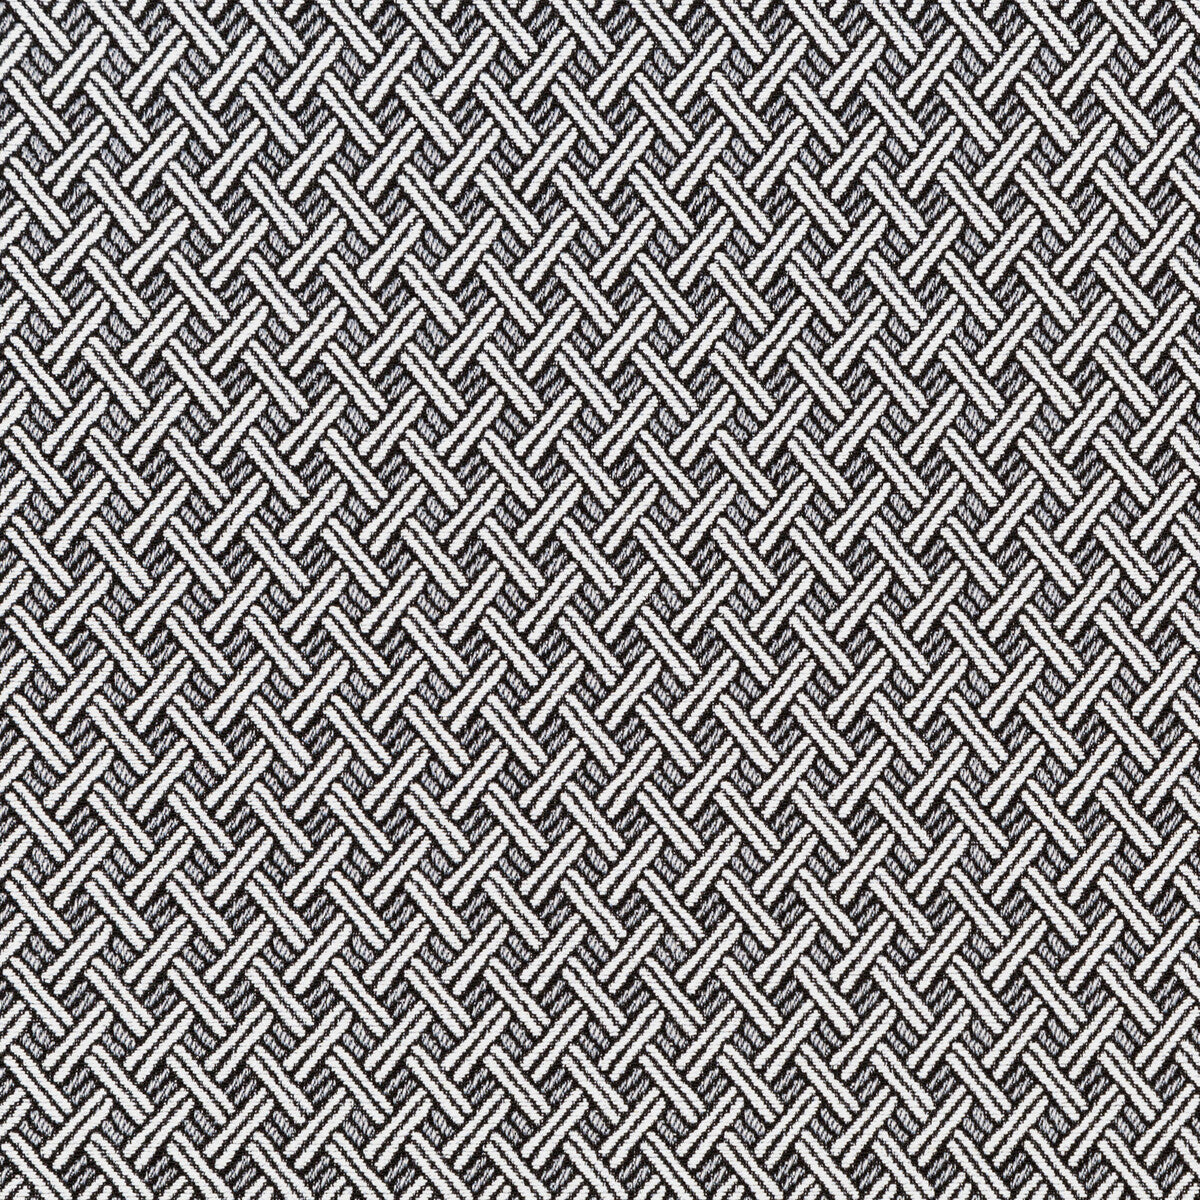 Kravet Smart fabric in 35938-81 color - pattern 35938.81.0 - by Kravet Smart in the Performance Kravetarmor collection